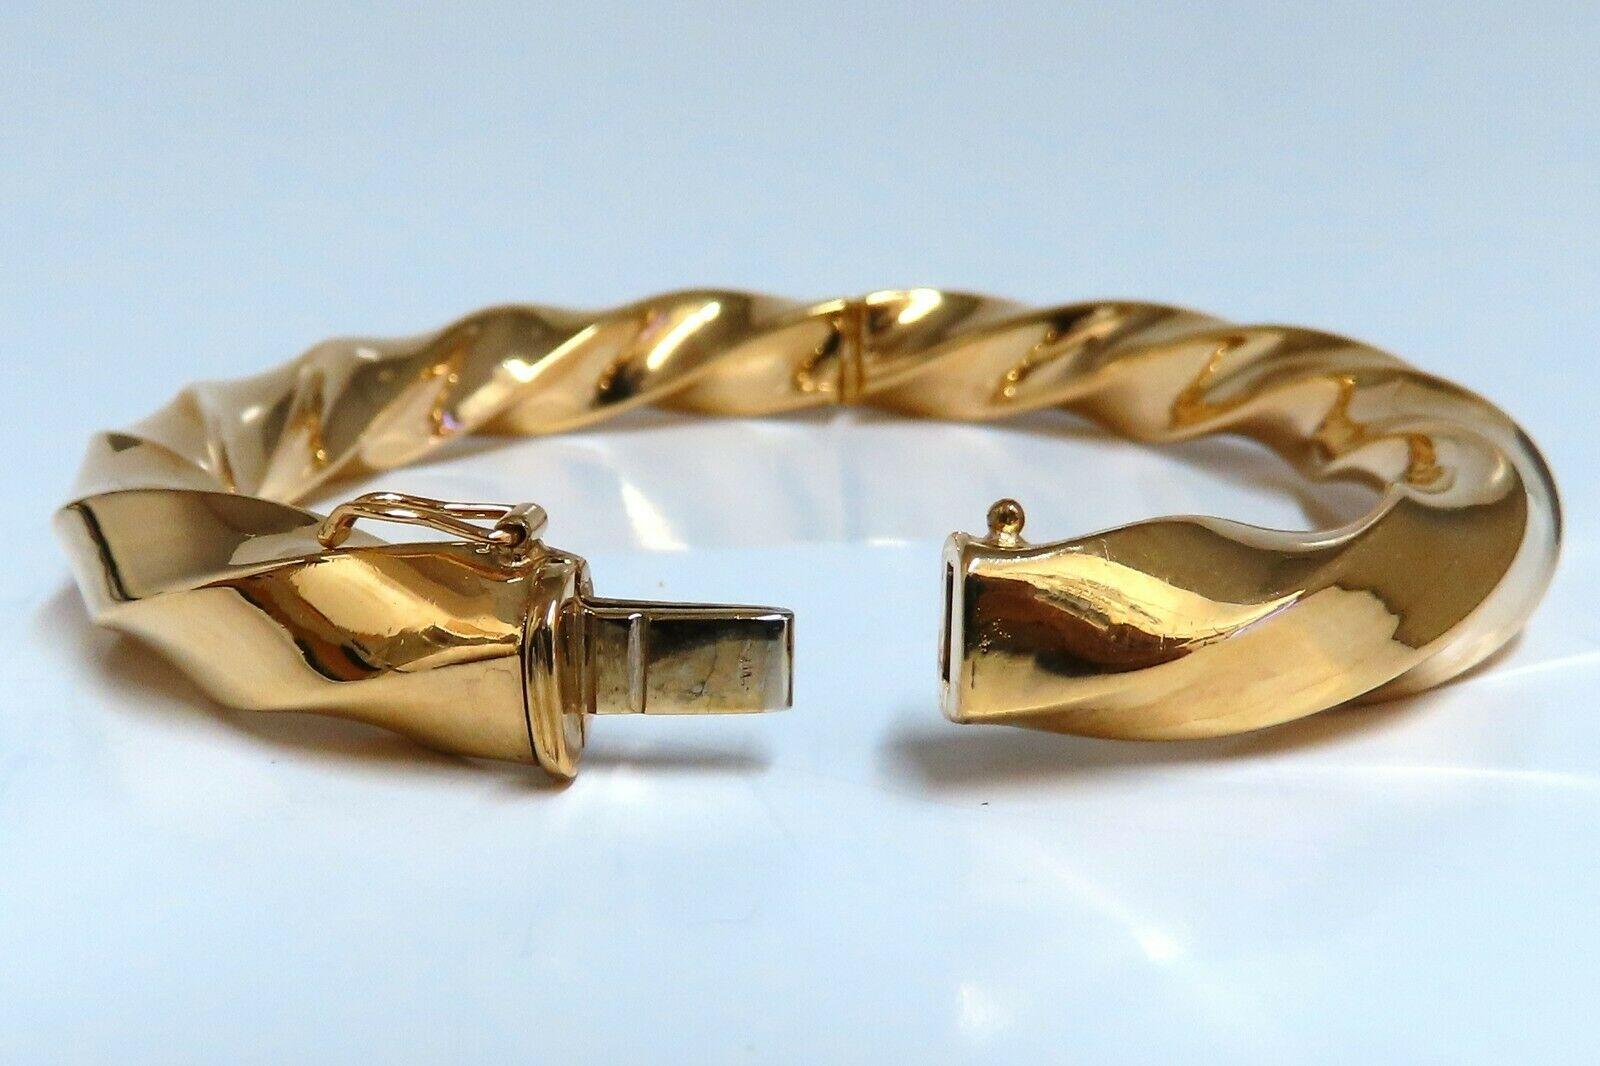 14k gold twisted bangle bracelet